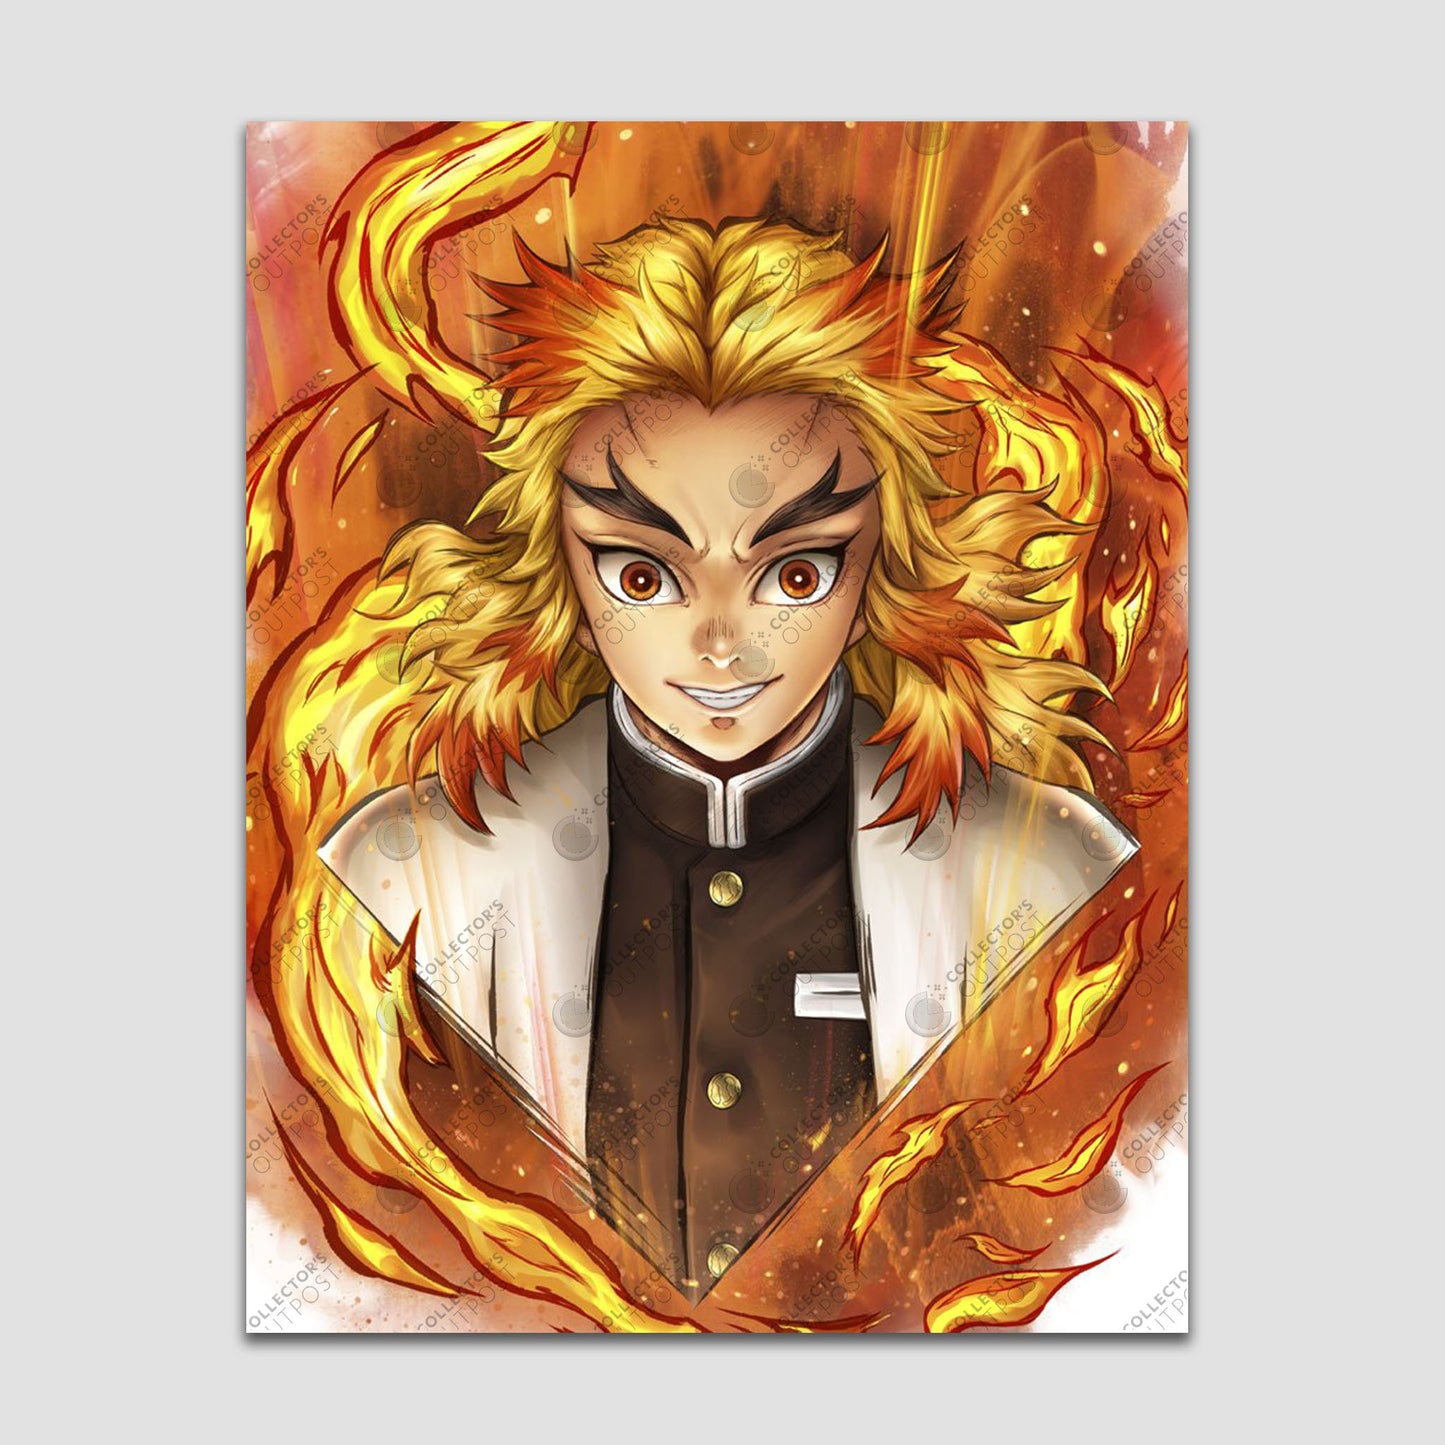 Rengoku "Flame Breathing" (Demon Slayer) Legacy Portrait Art Print